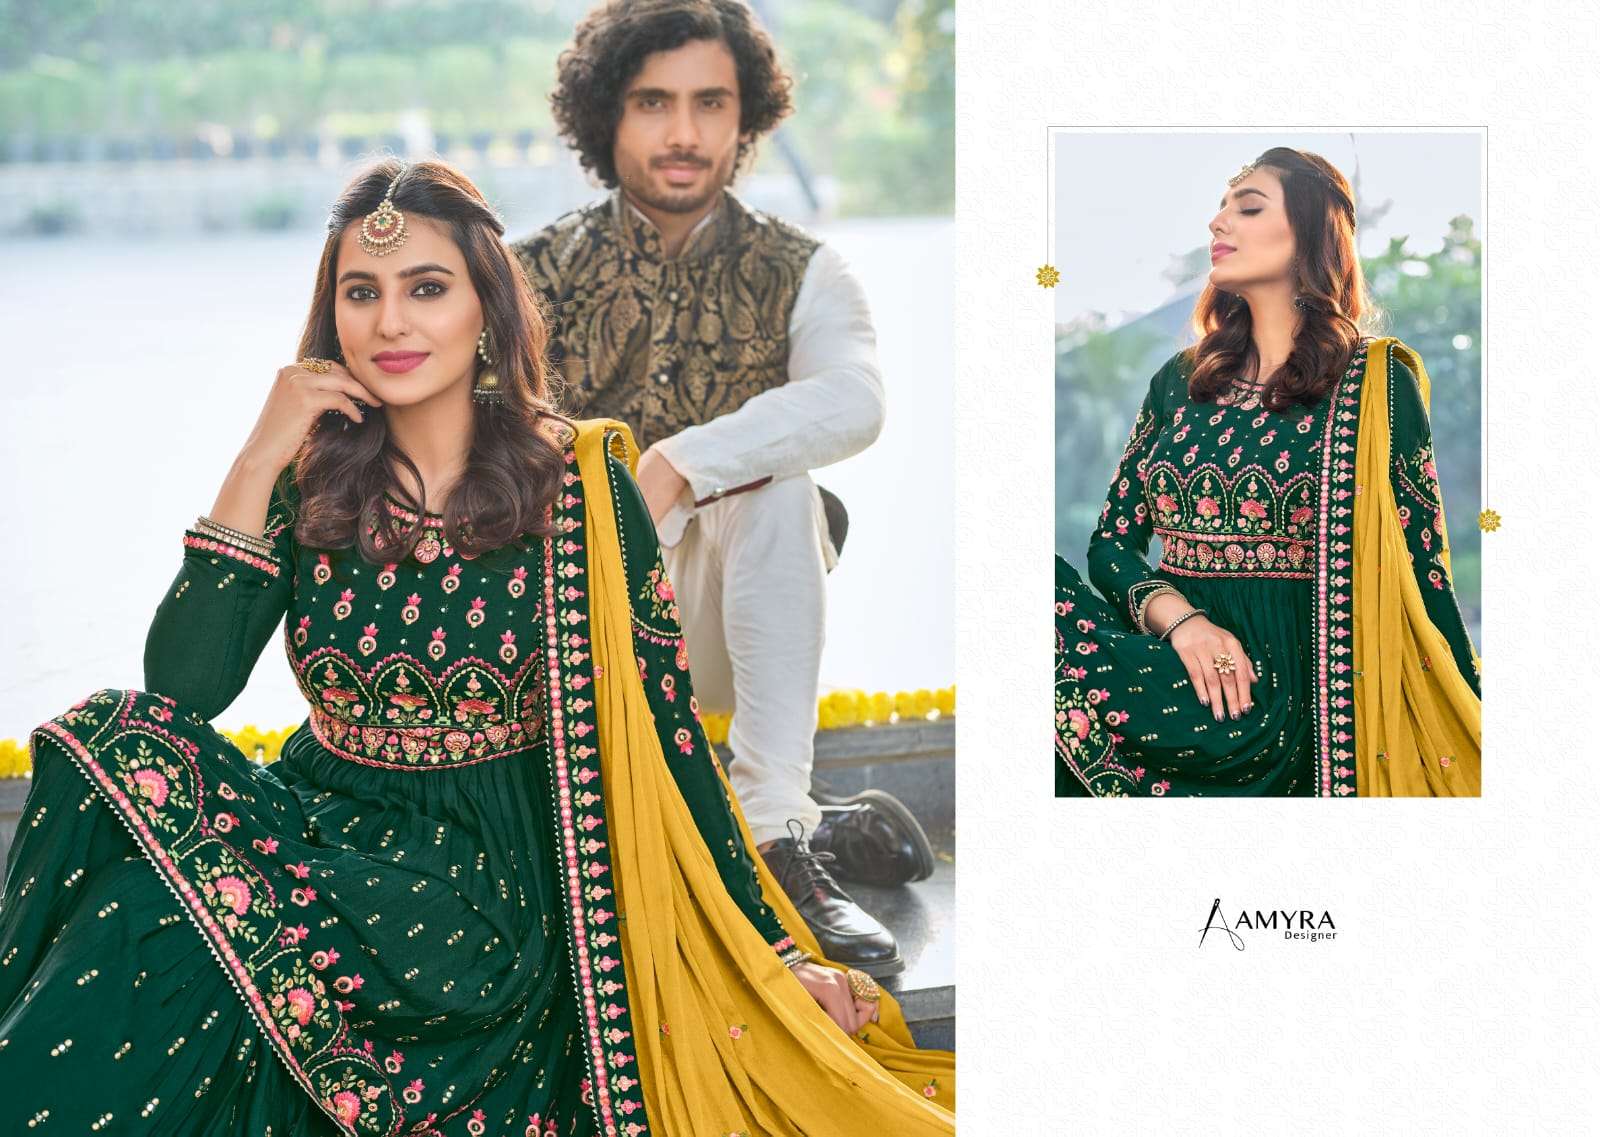 aamyra designer riwaz vol 3 1009-1012 series fancy palzo salwar suits collection wholesale price surat